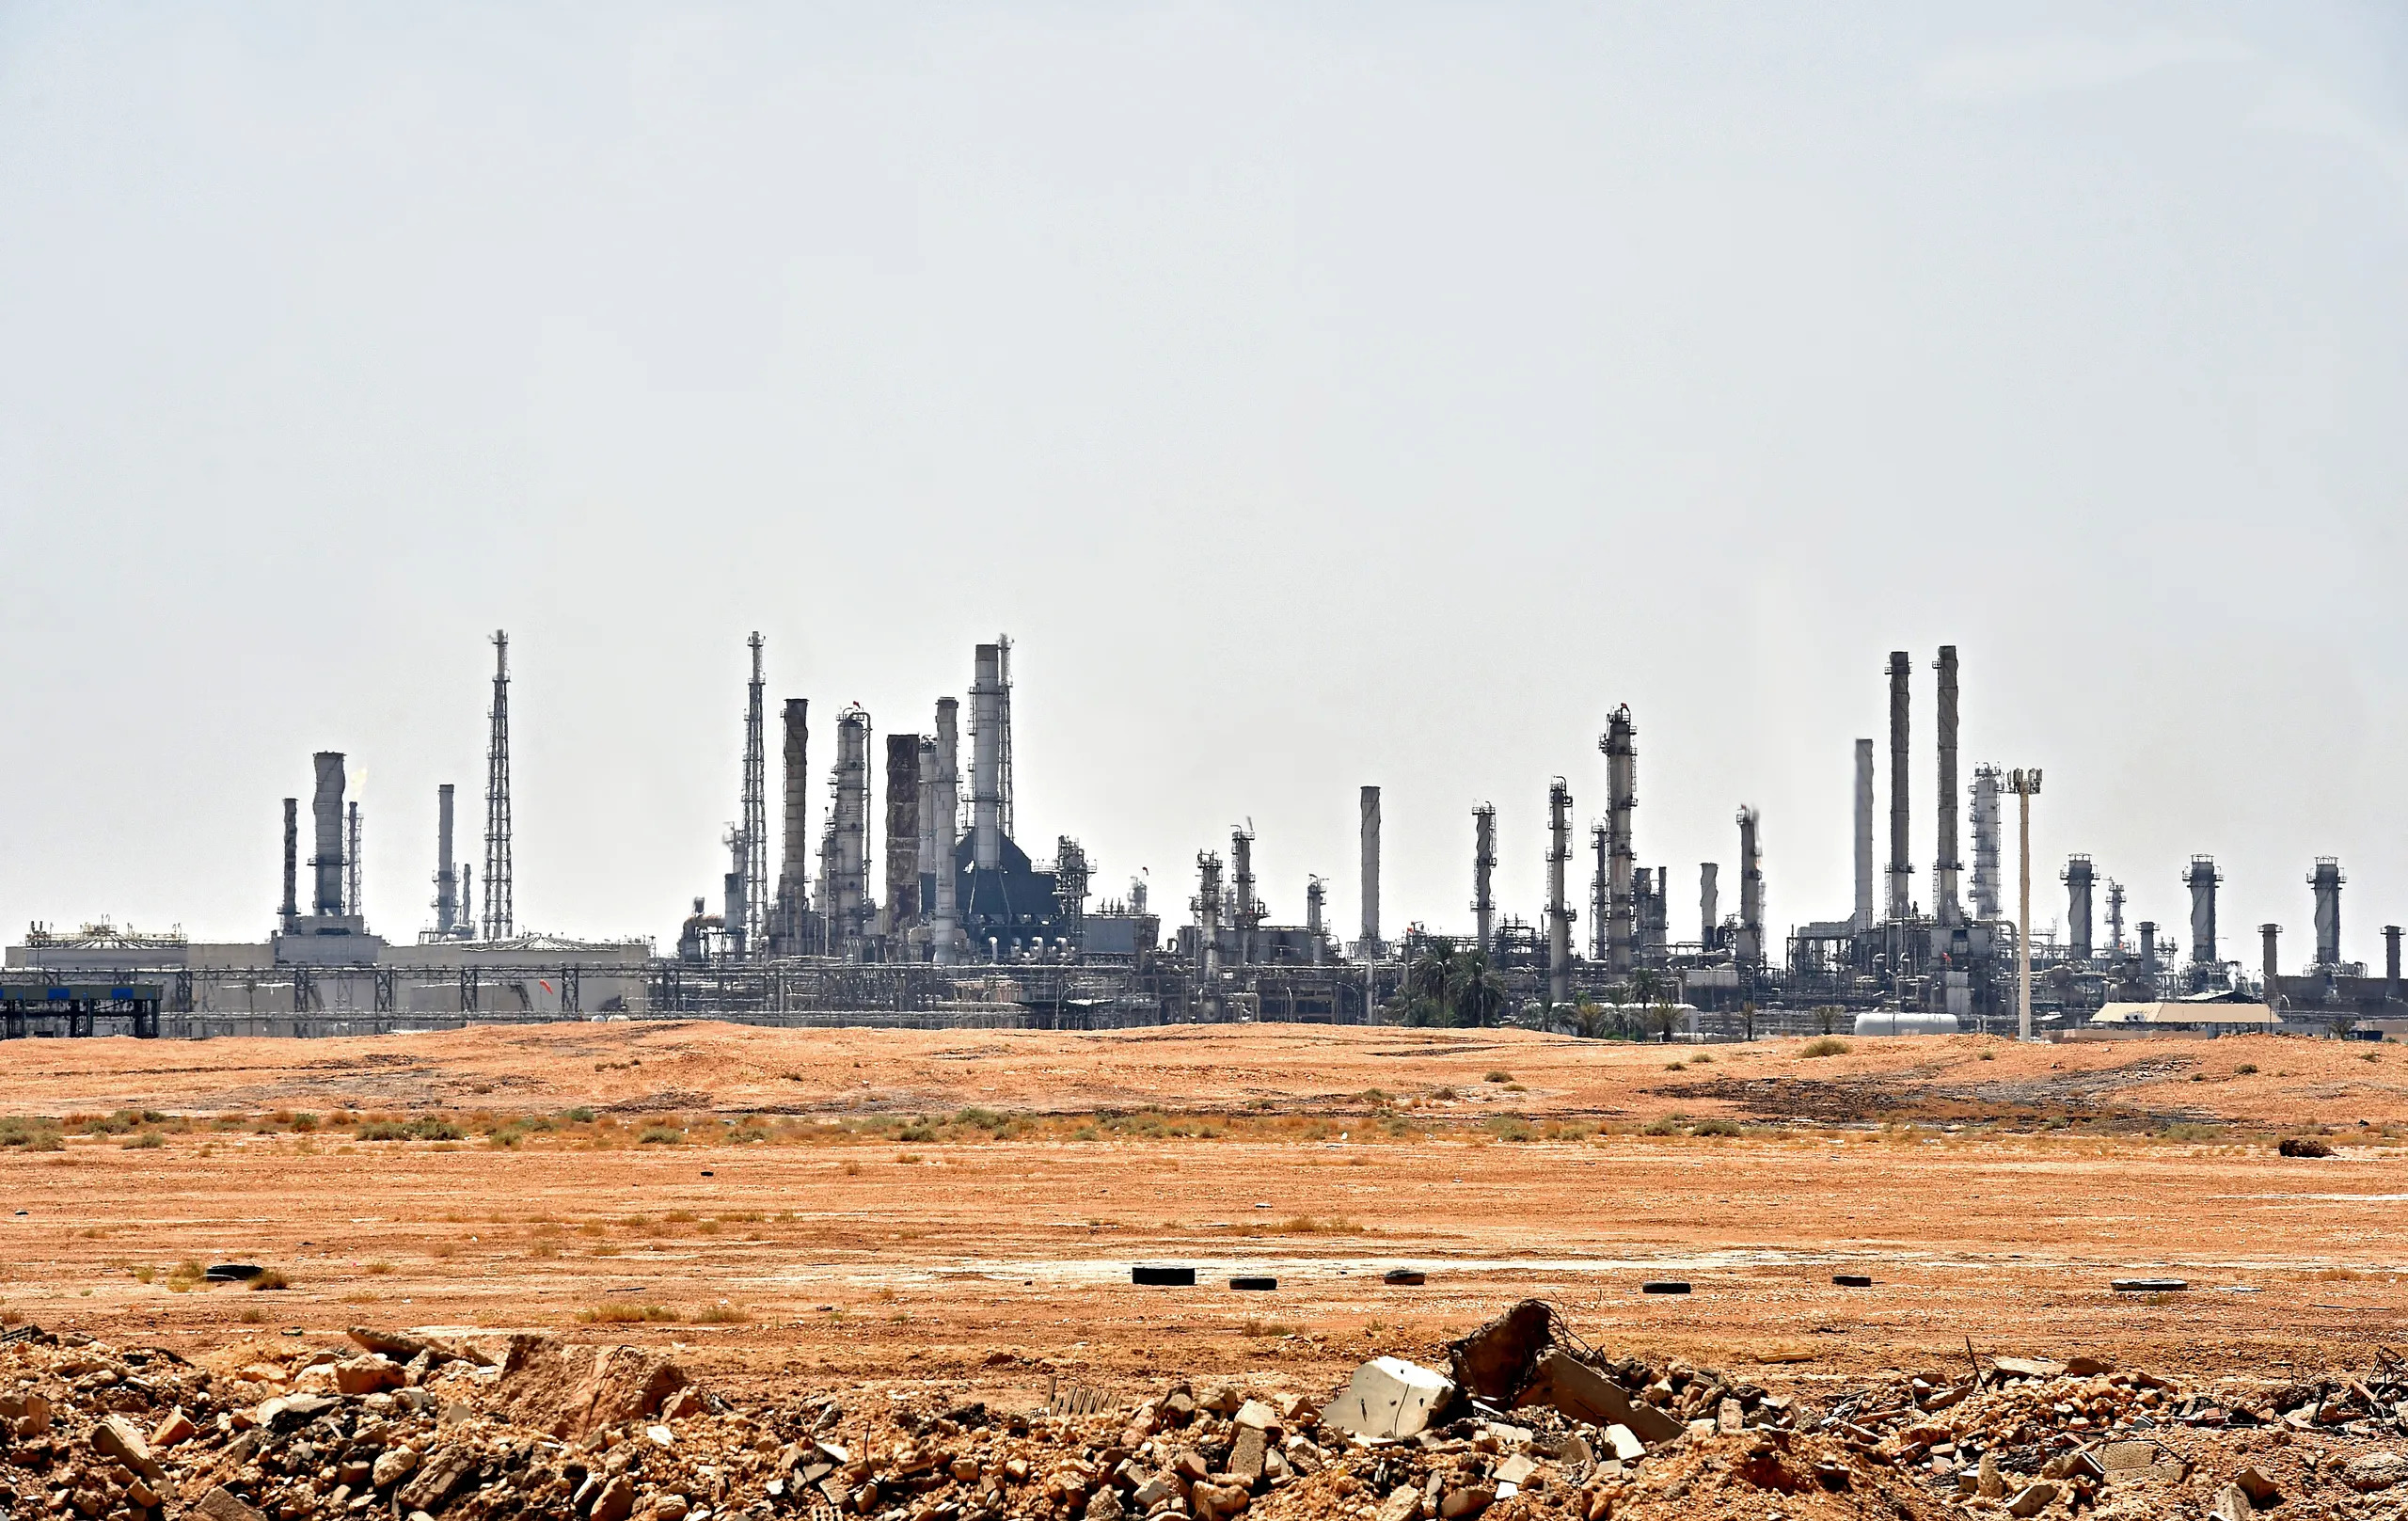 A Saudi oil refinery